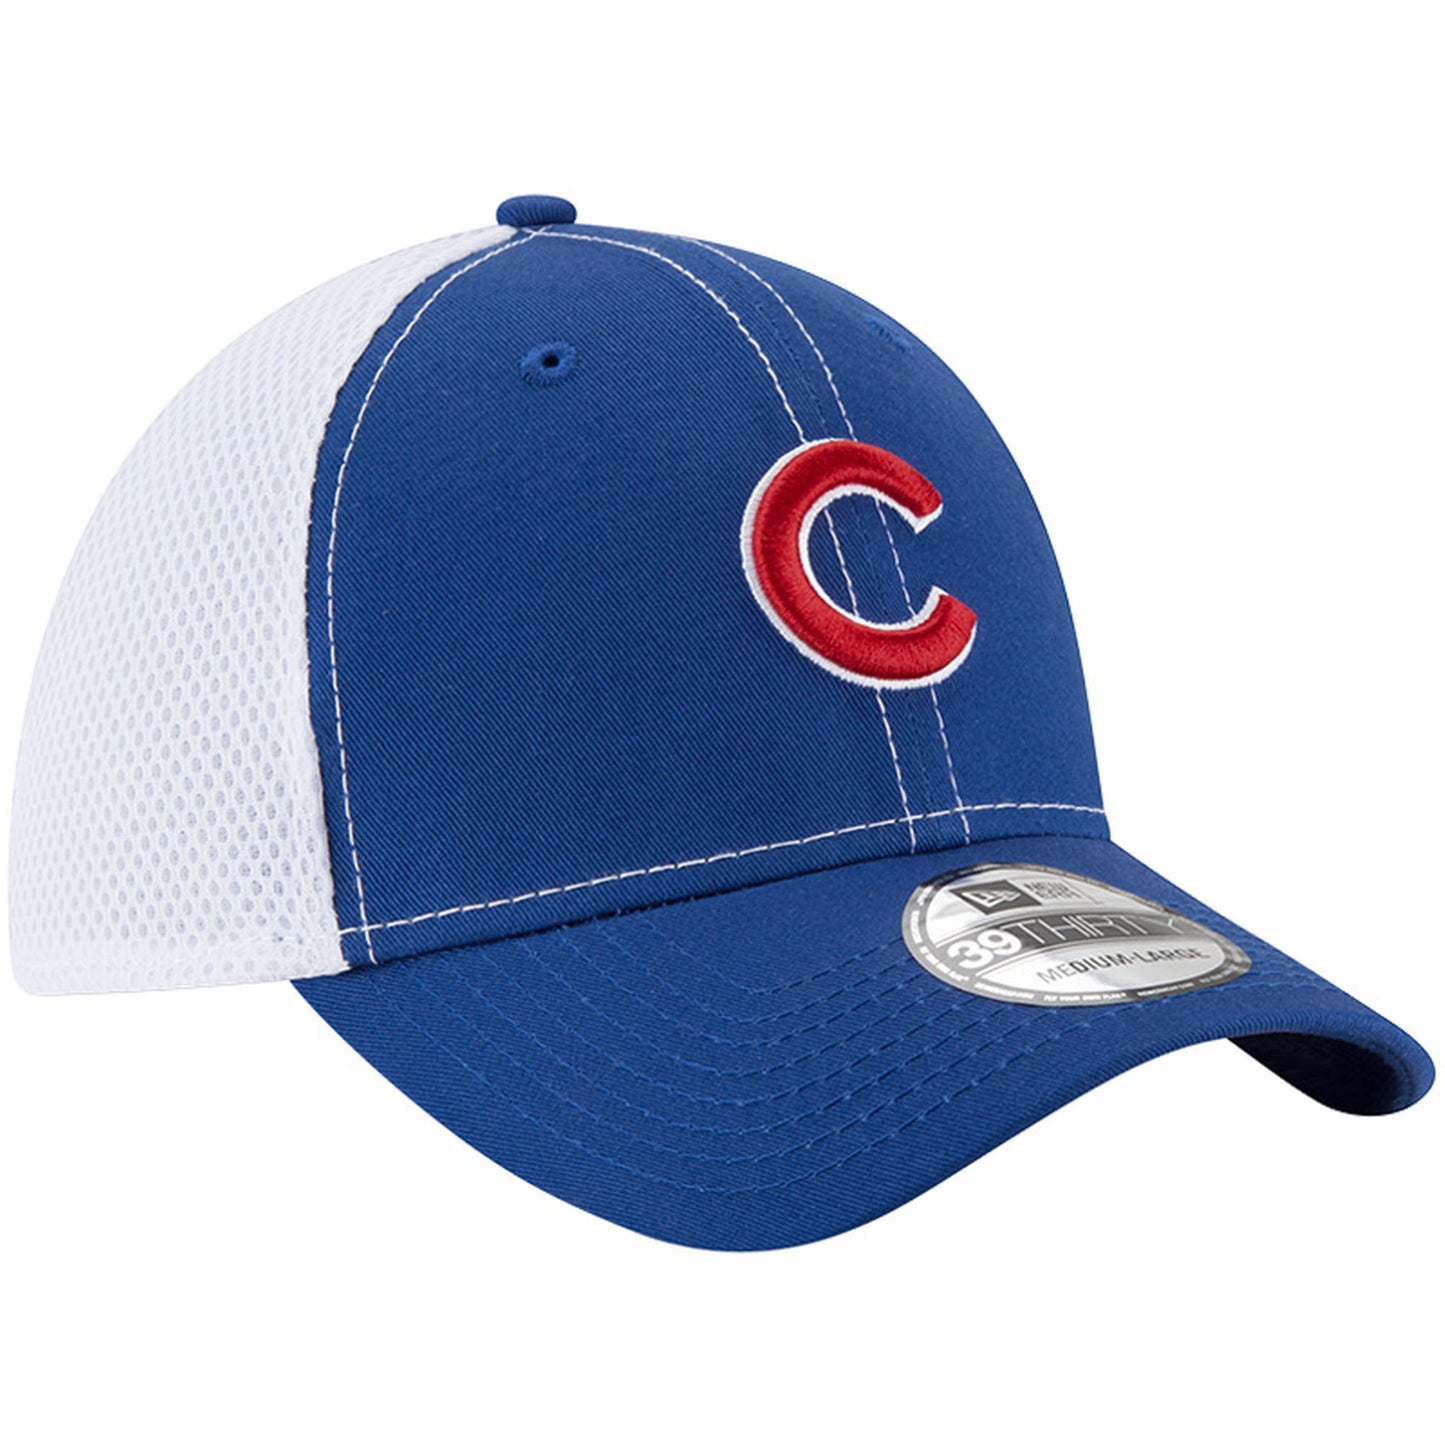 Men's Chicago Cubs New Era Royal/White Semester Neo 39THIRTY Flex Hat